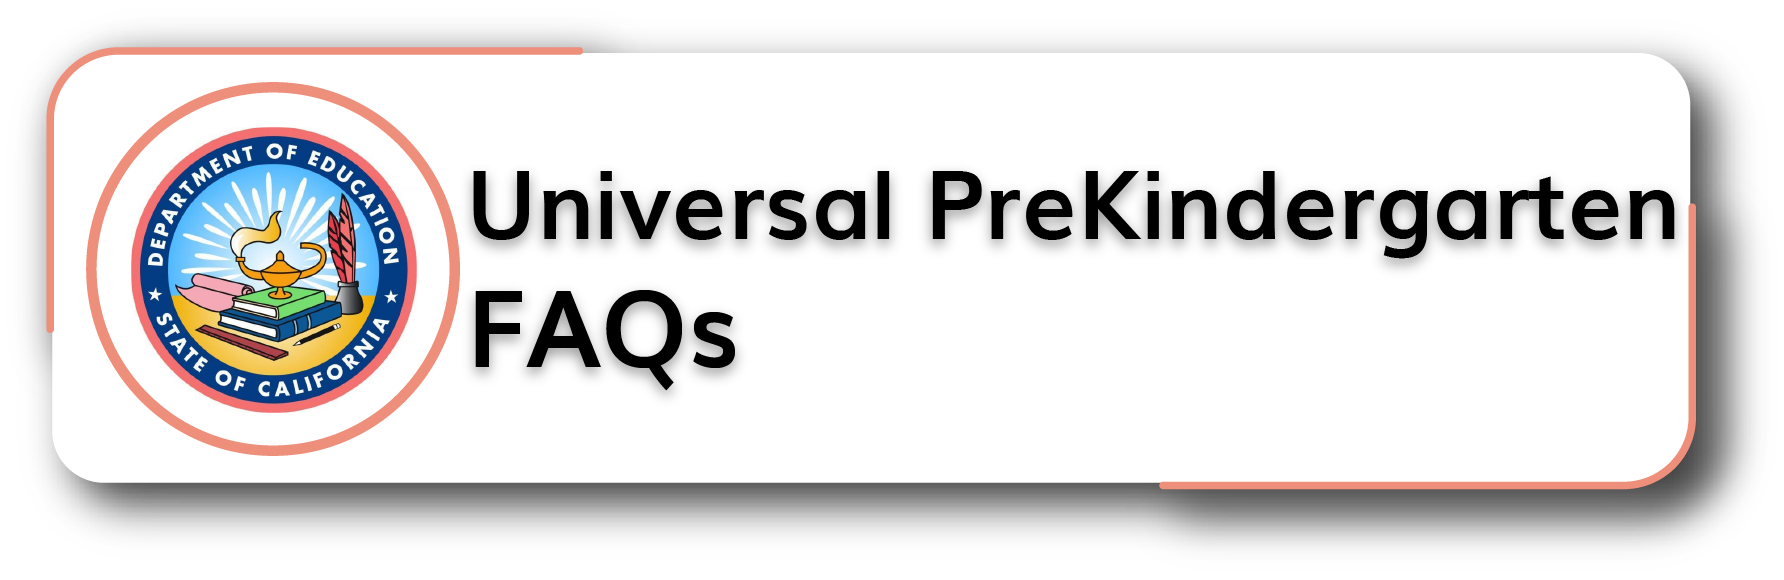 Universal PreKindergarten FAQs Button